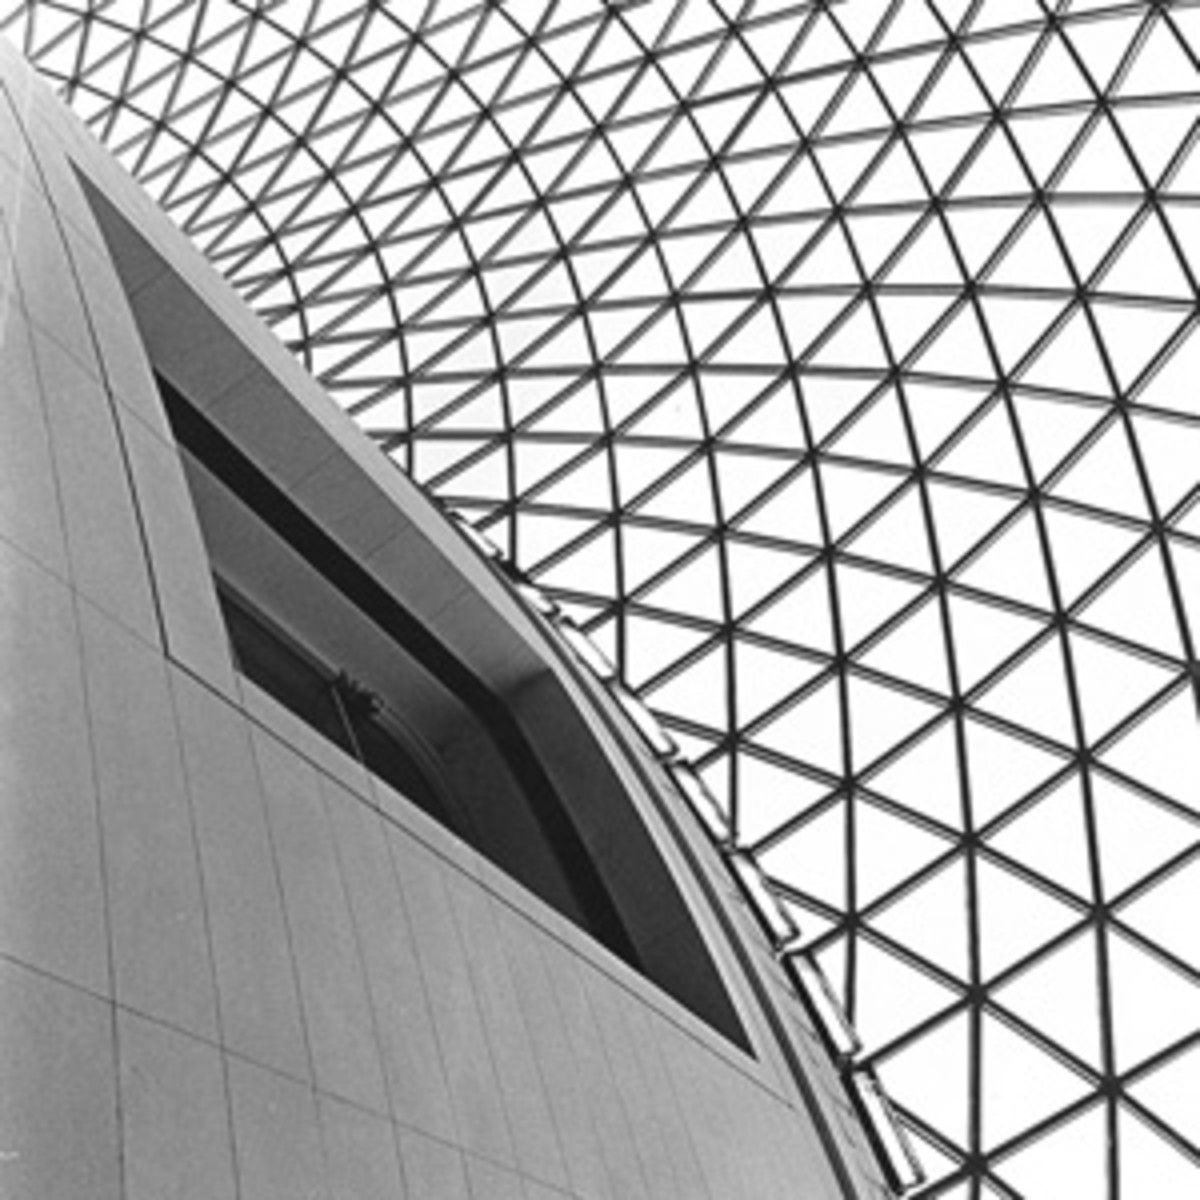 Sounds & Spaces 001: Max Cooper & The British Museum